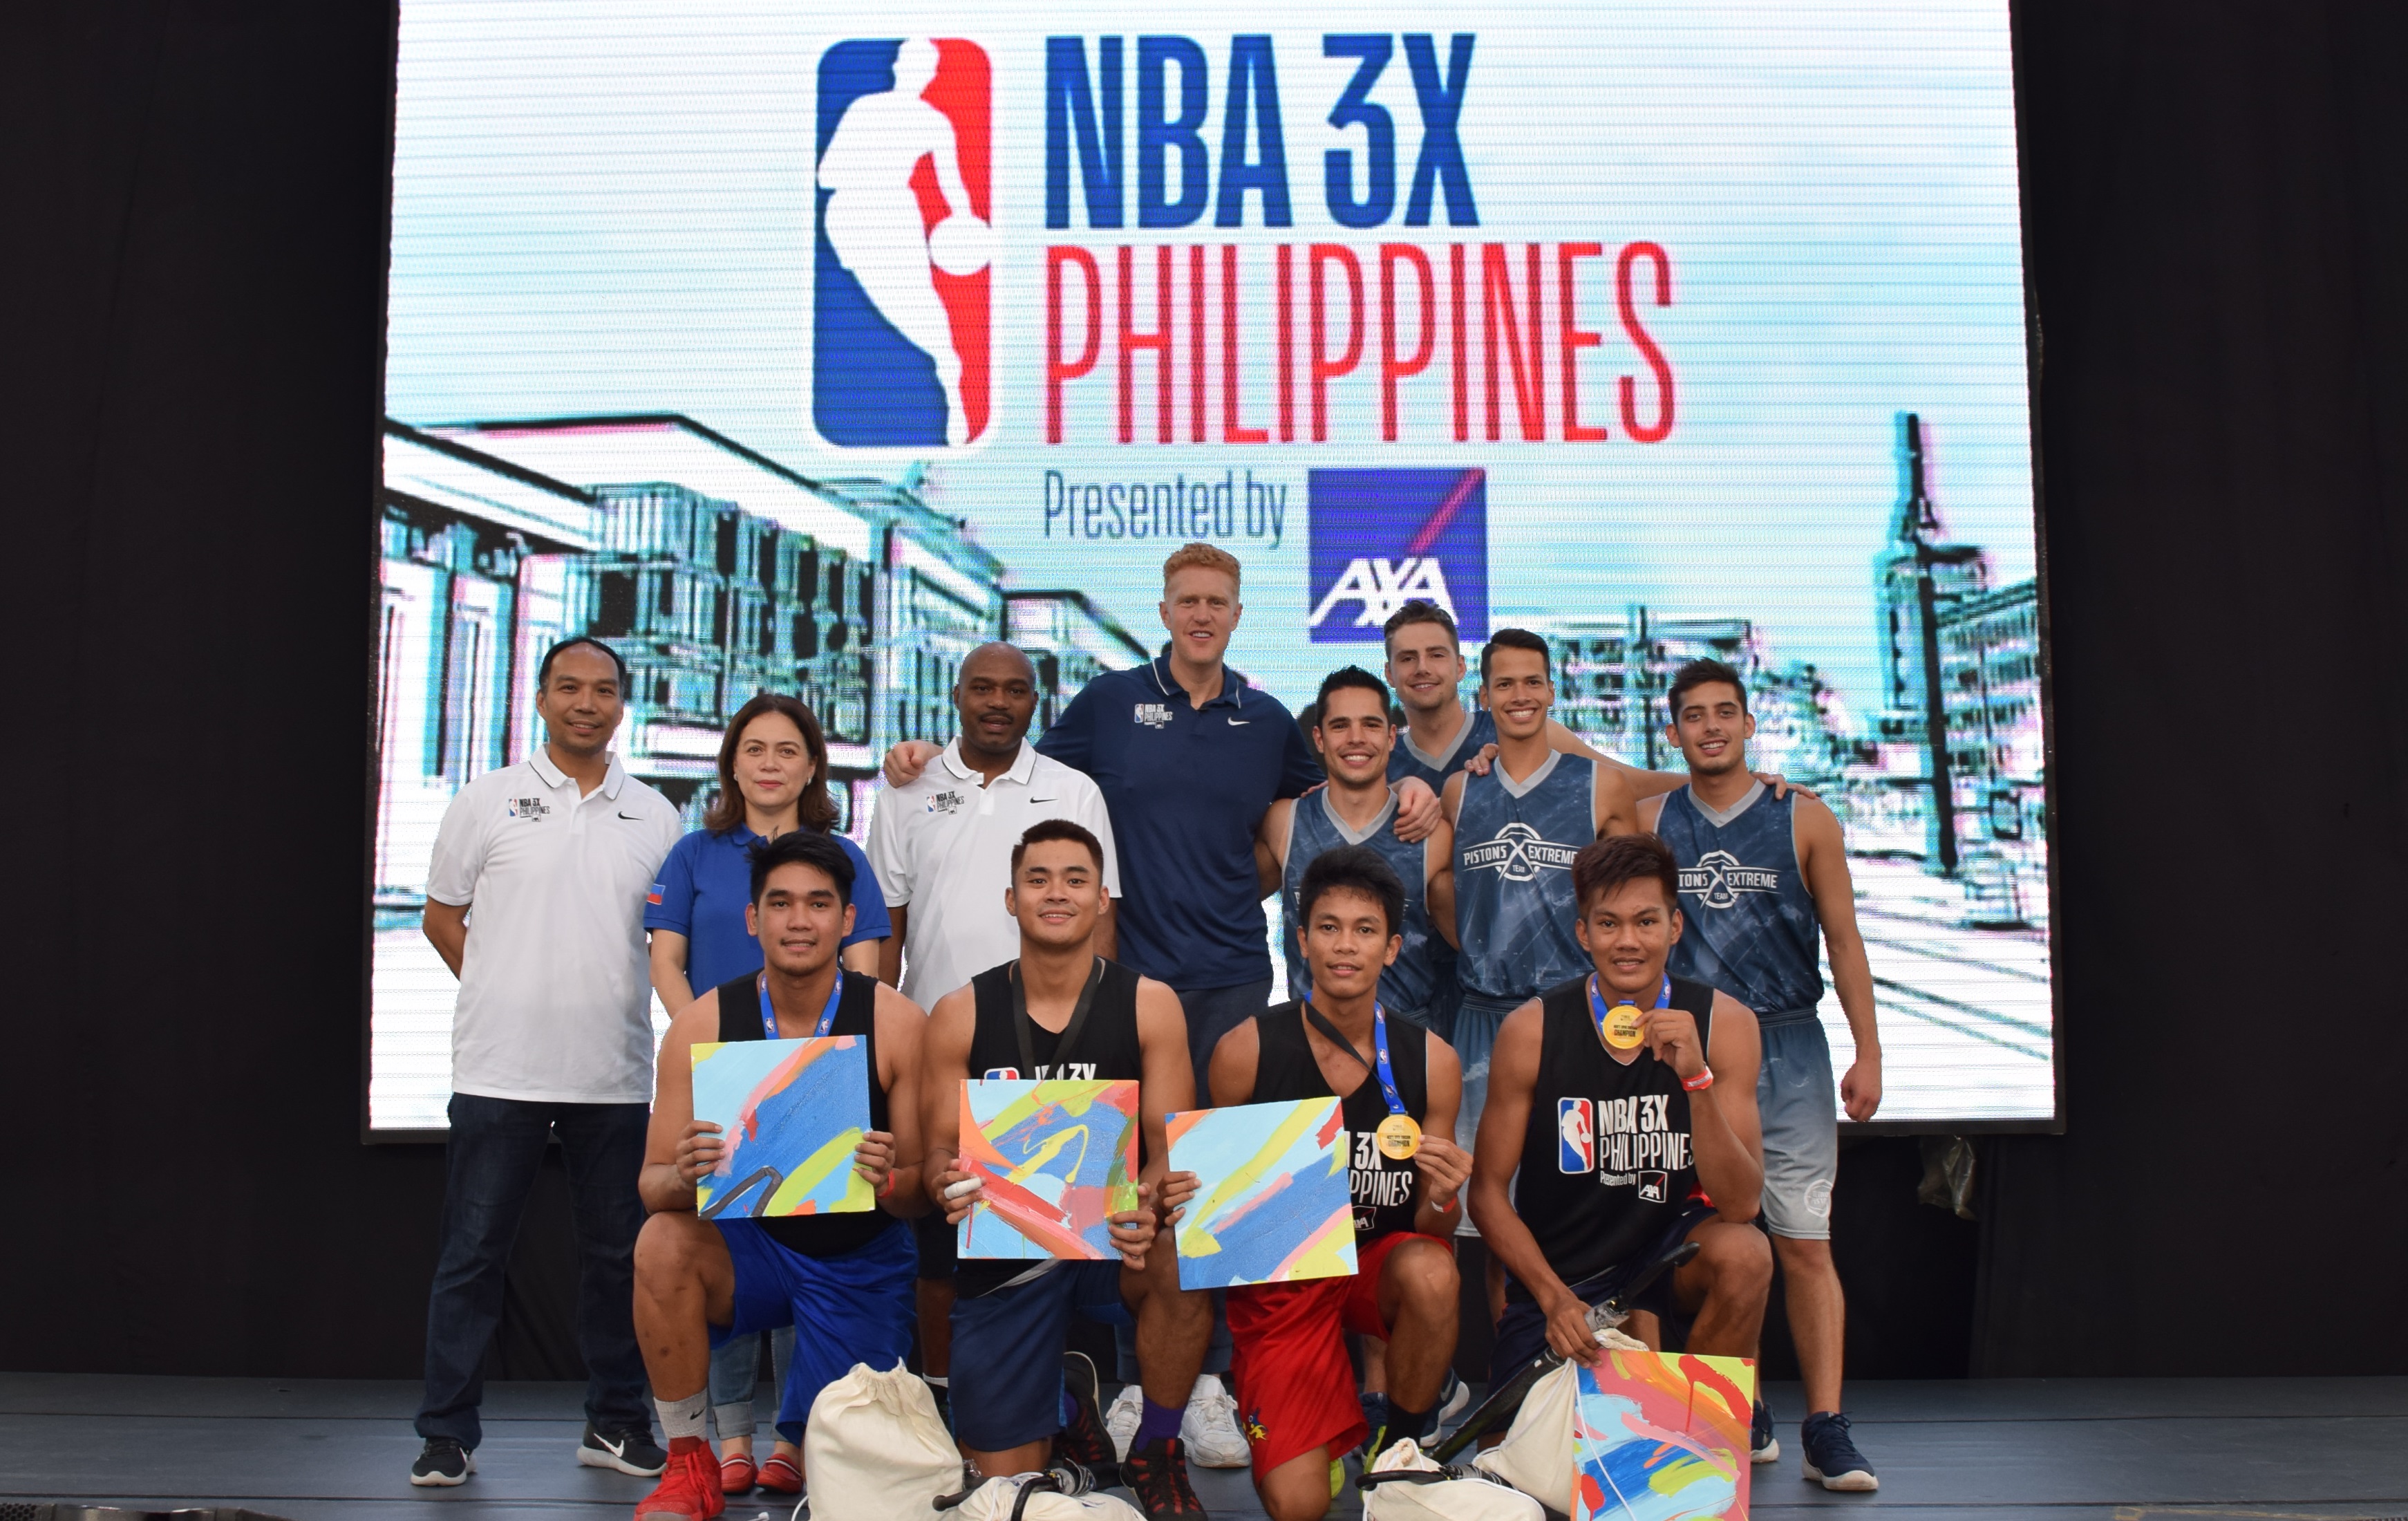 Detroit Pistons Extreme Team entertains NBA 3X Philippines 2018 audience